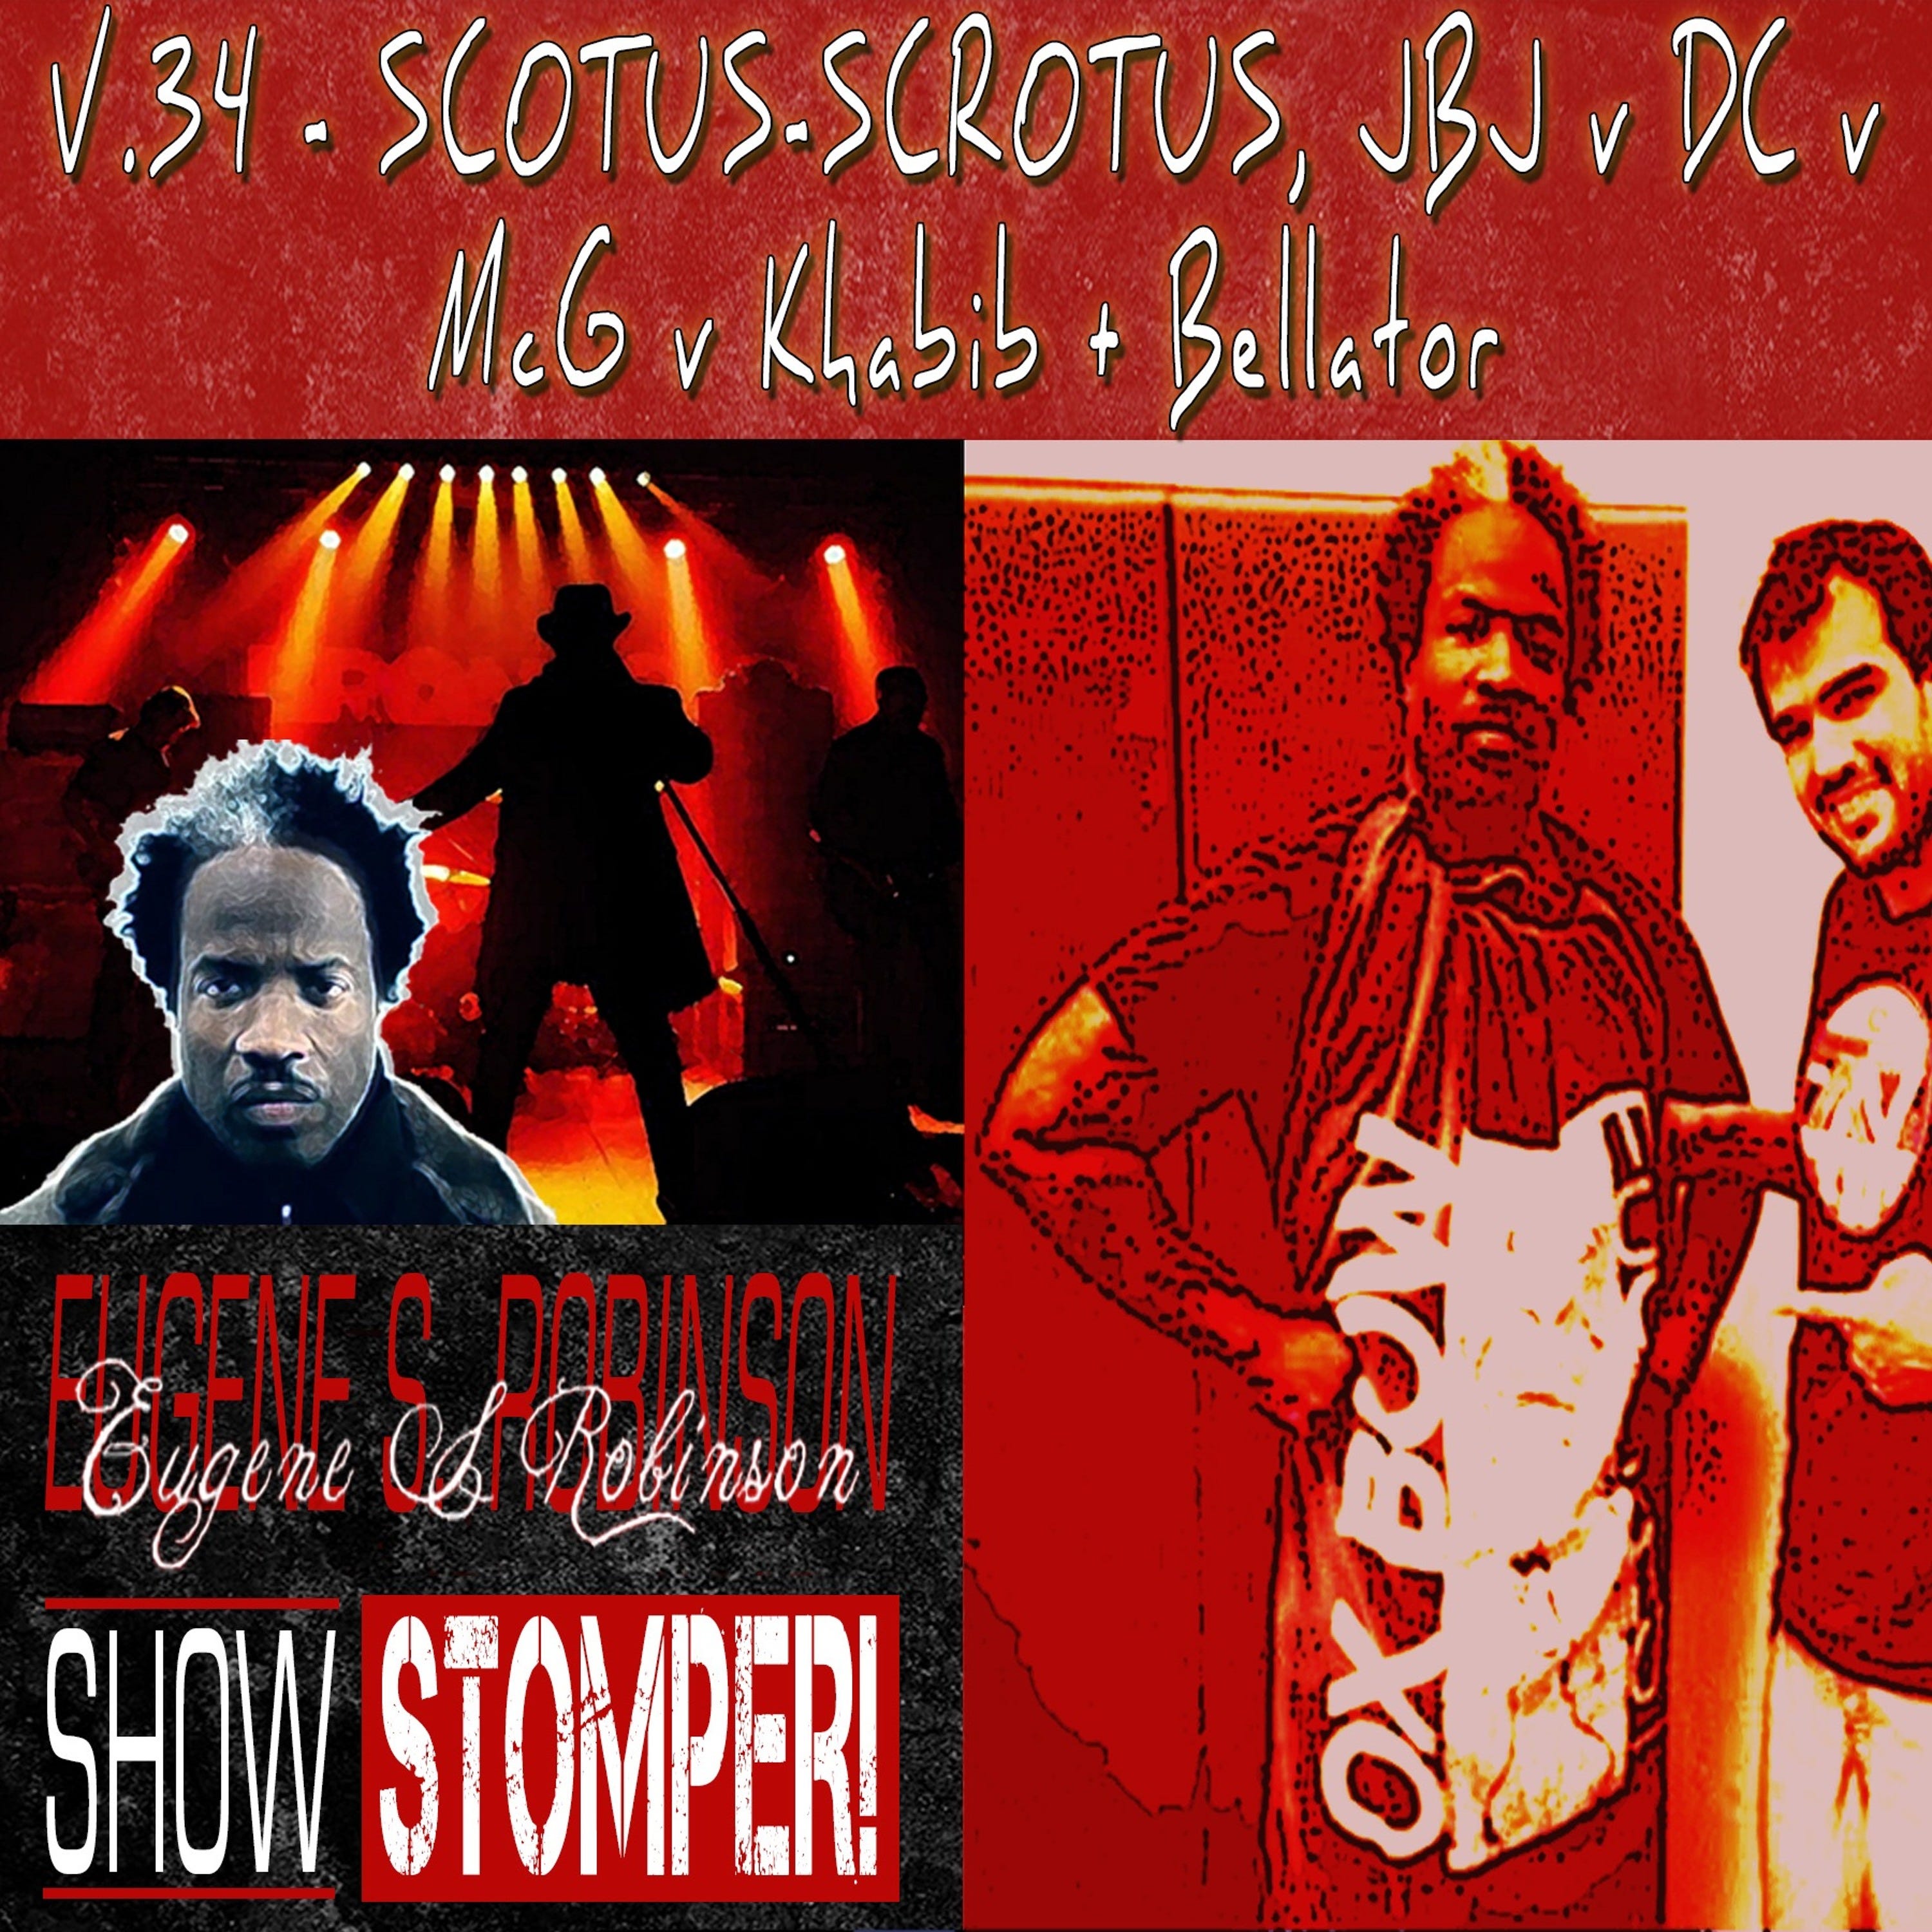 The Eugene S. Robinson Show Stomper! V.34 - SCOTUS - SCROTUS, JBJ V DC V McG V Khabib & Bellator